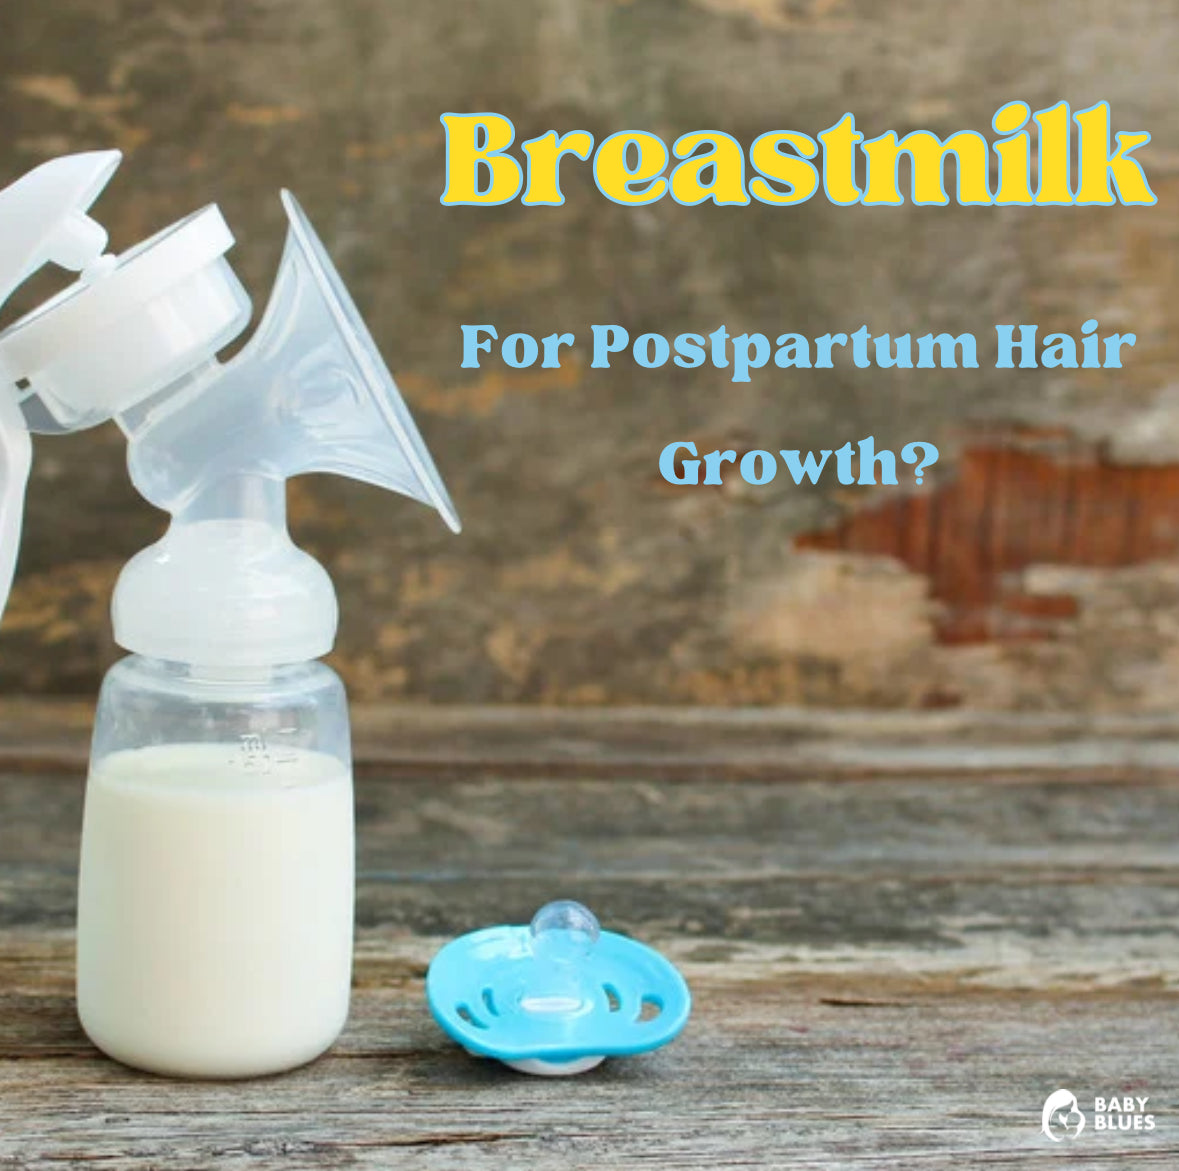 Can Breastmilk Stimulate Postpartum Hair Growth?